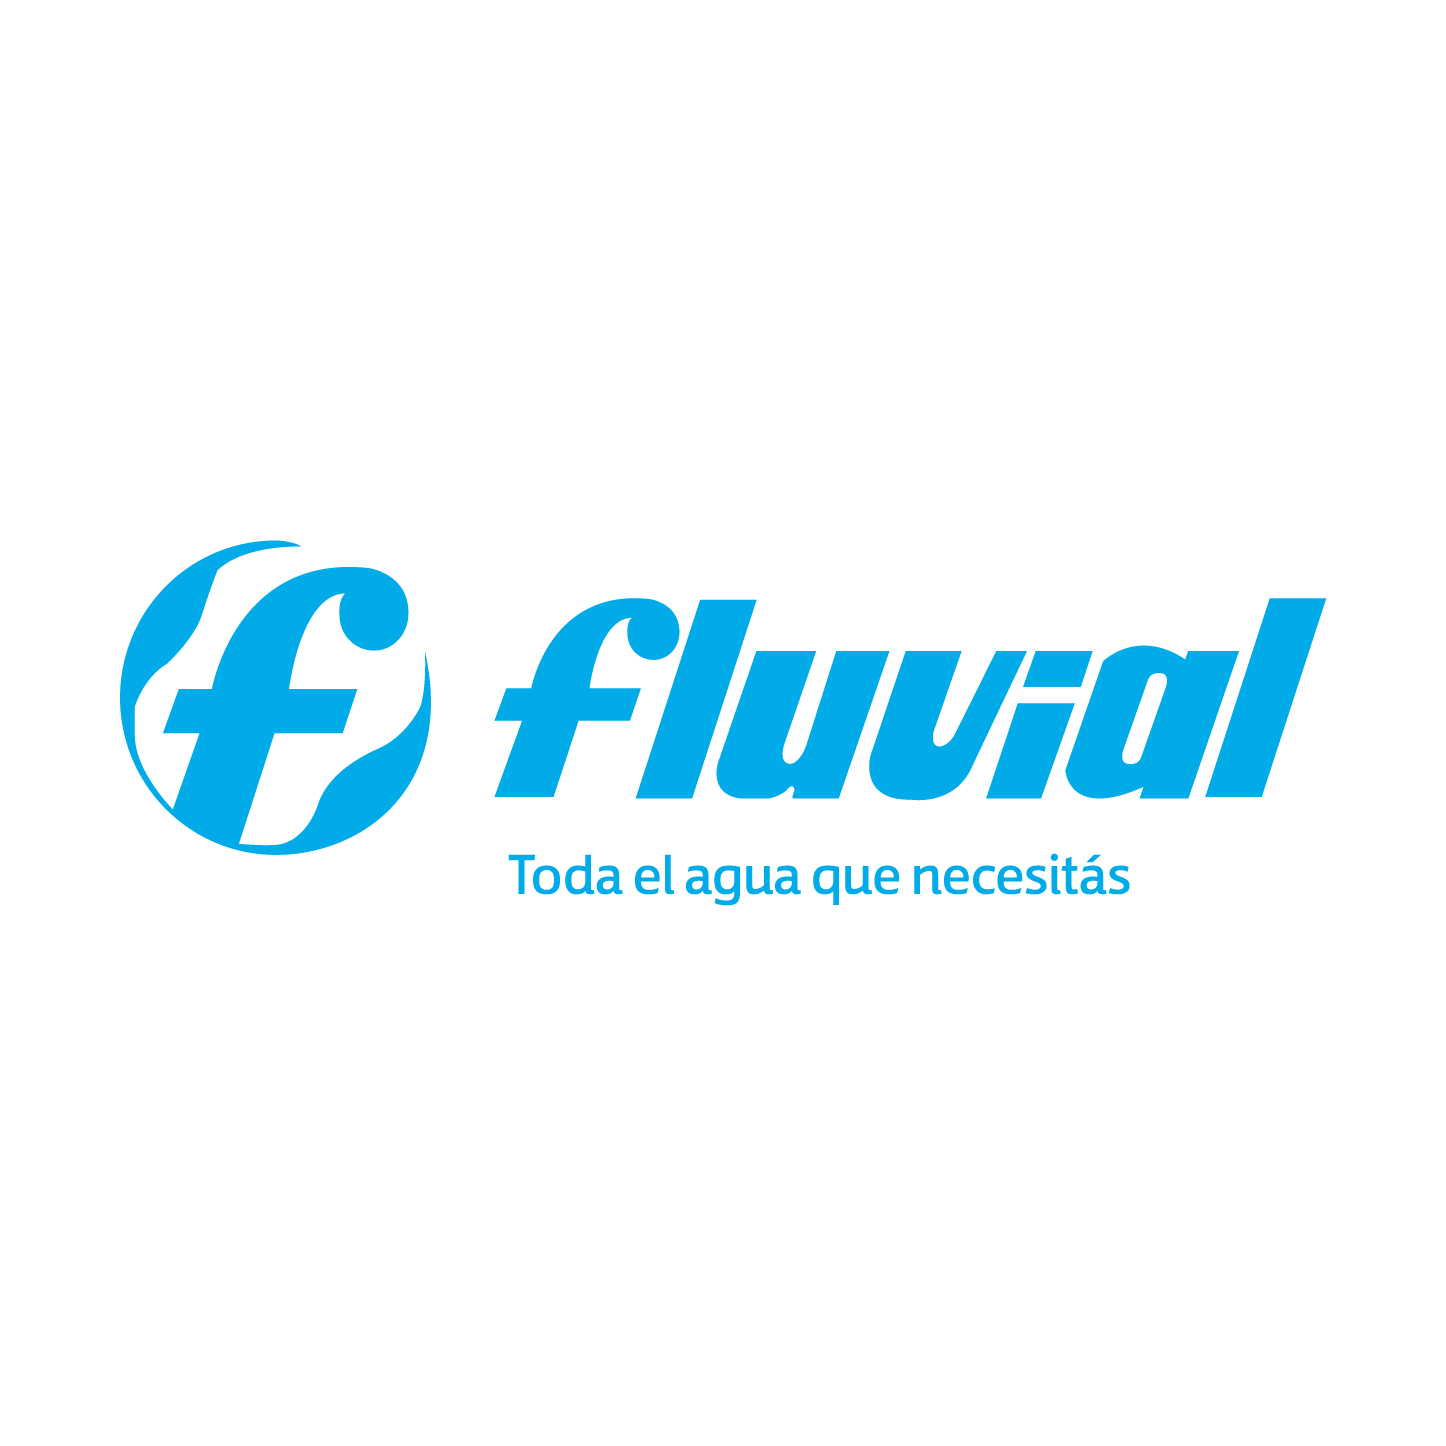 Fluvial